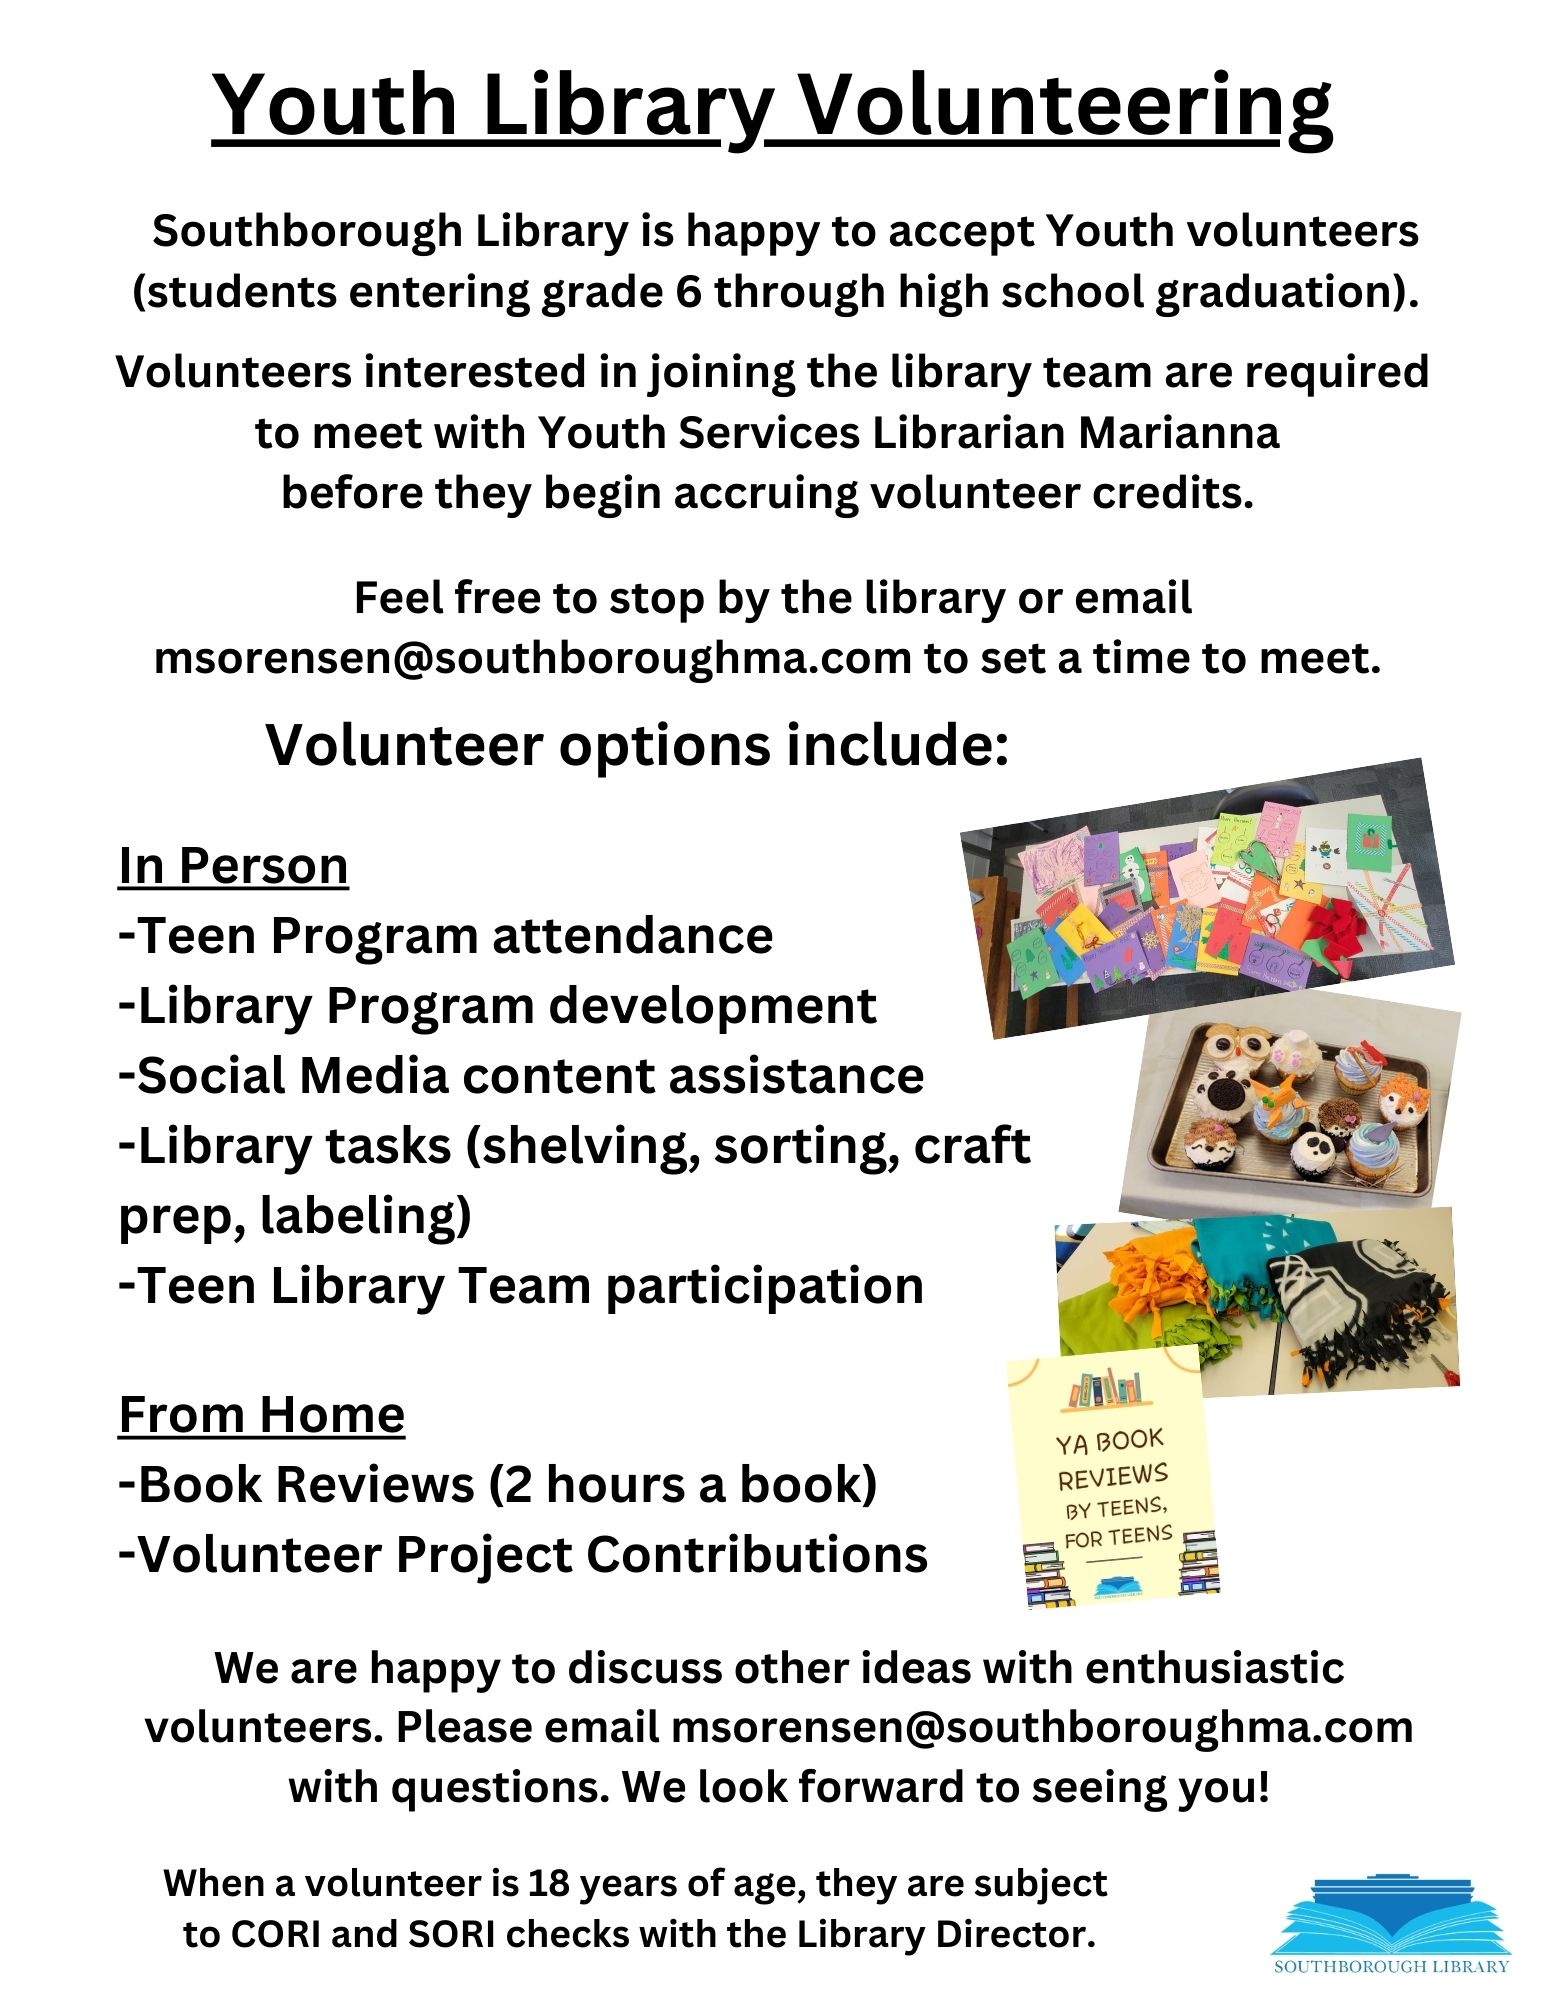 Youth Volunteering Information